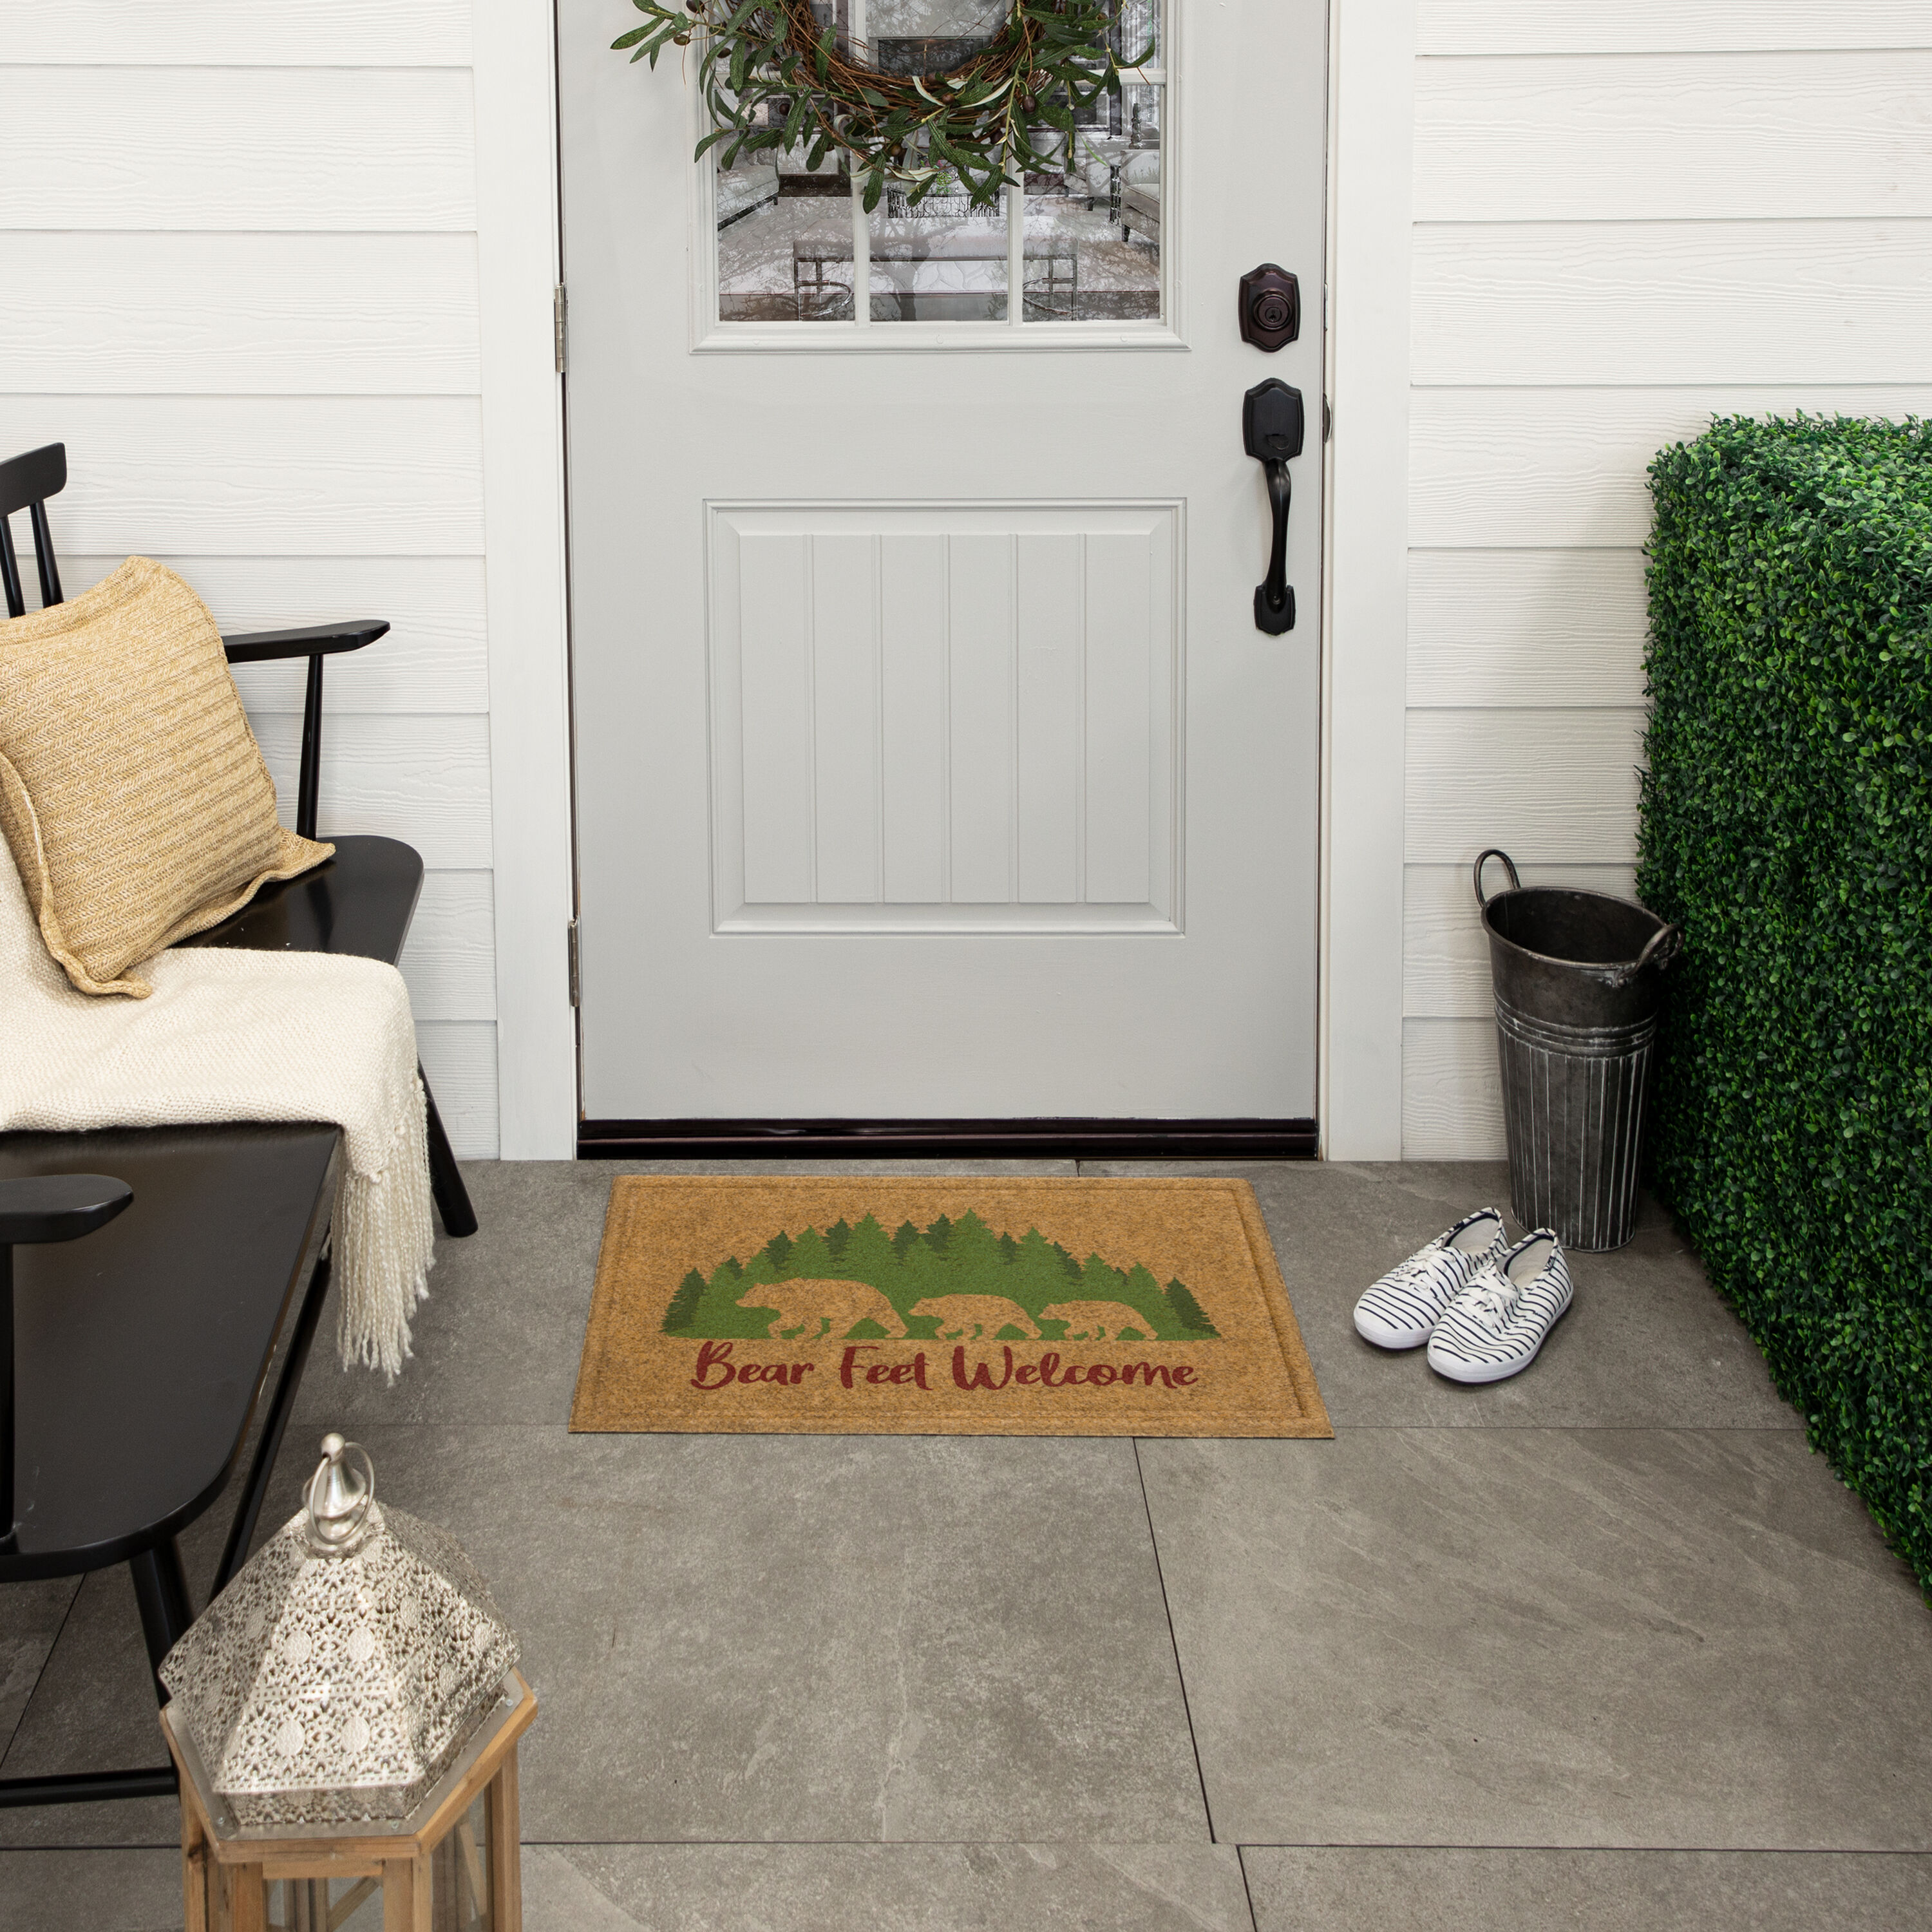 Style Selections 2-ft x 3-ft Natural Rectangular Indoor Fall Door